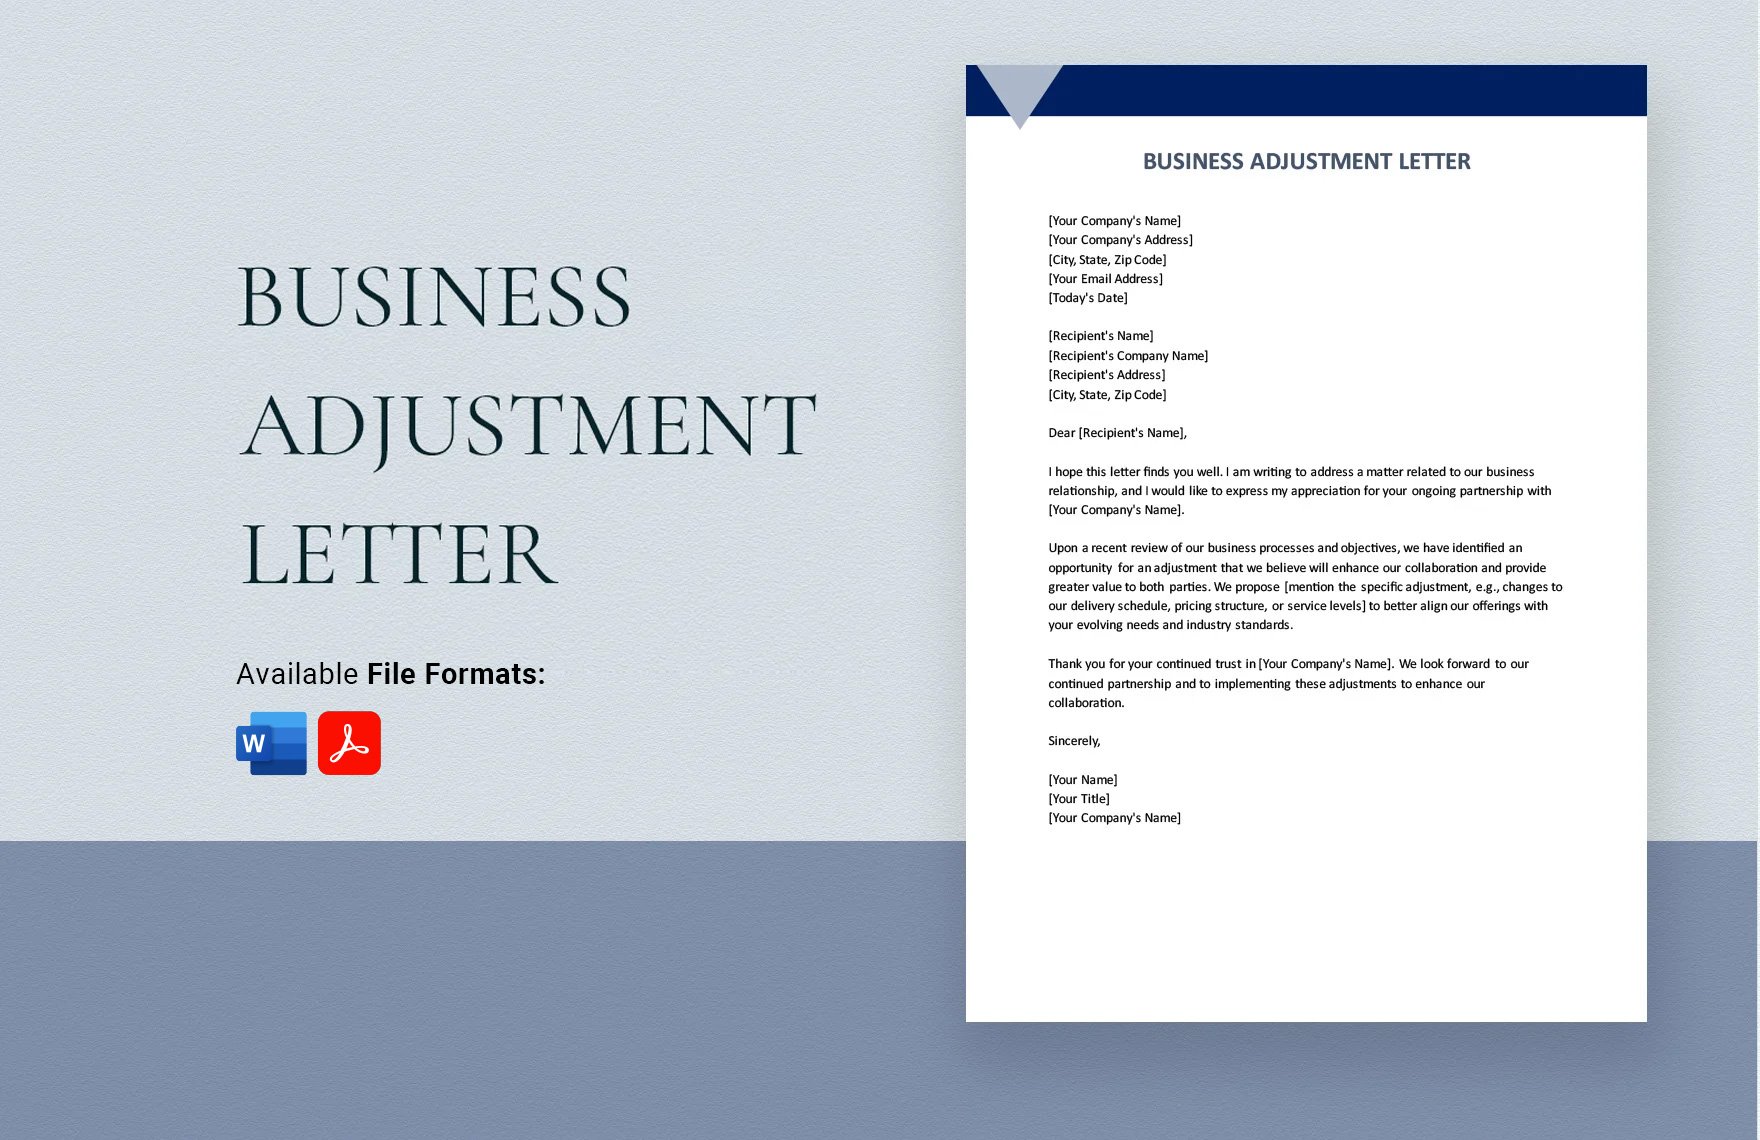 Business Adjustment Letter in Word, PDF